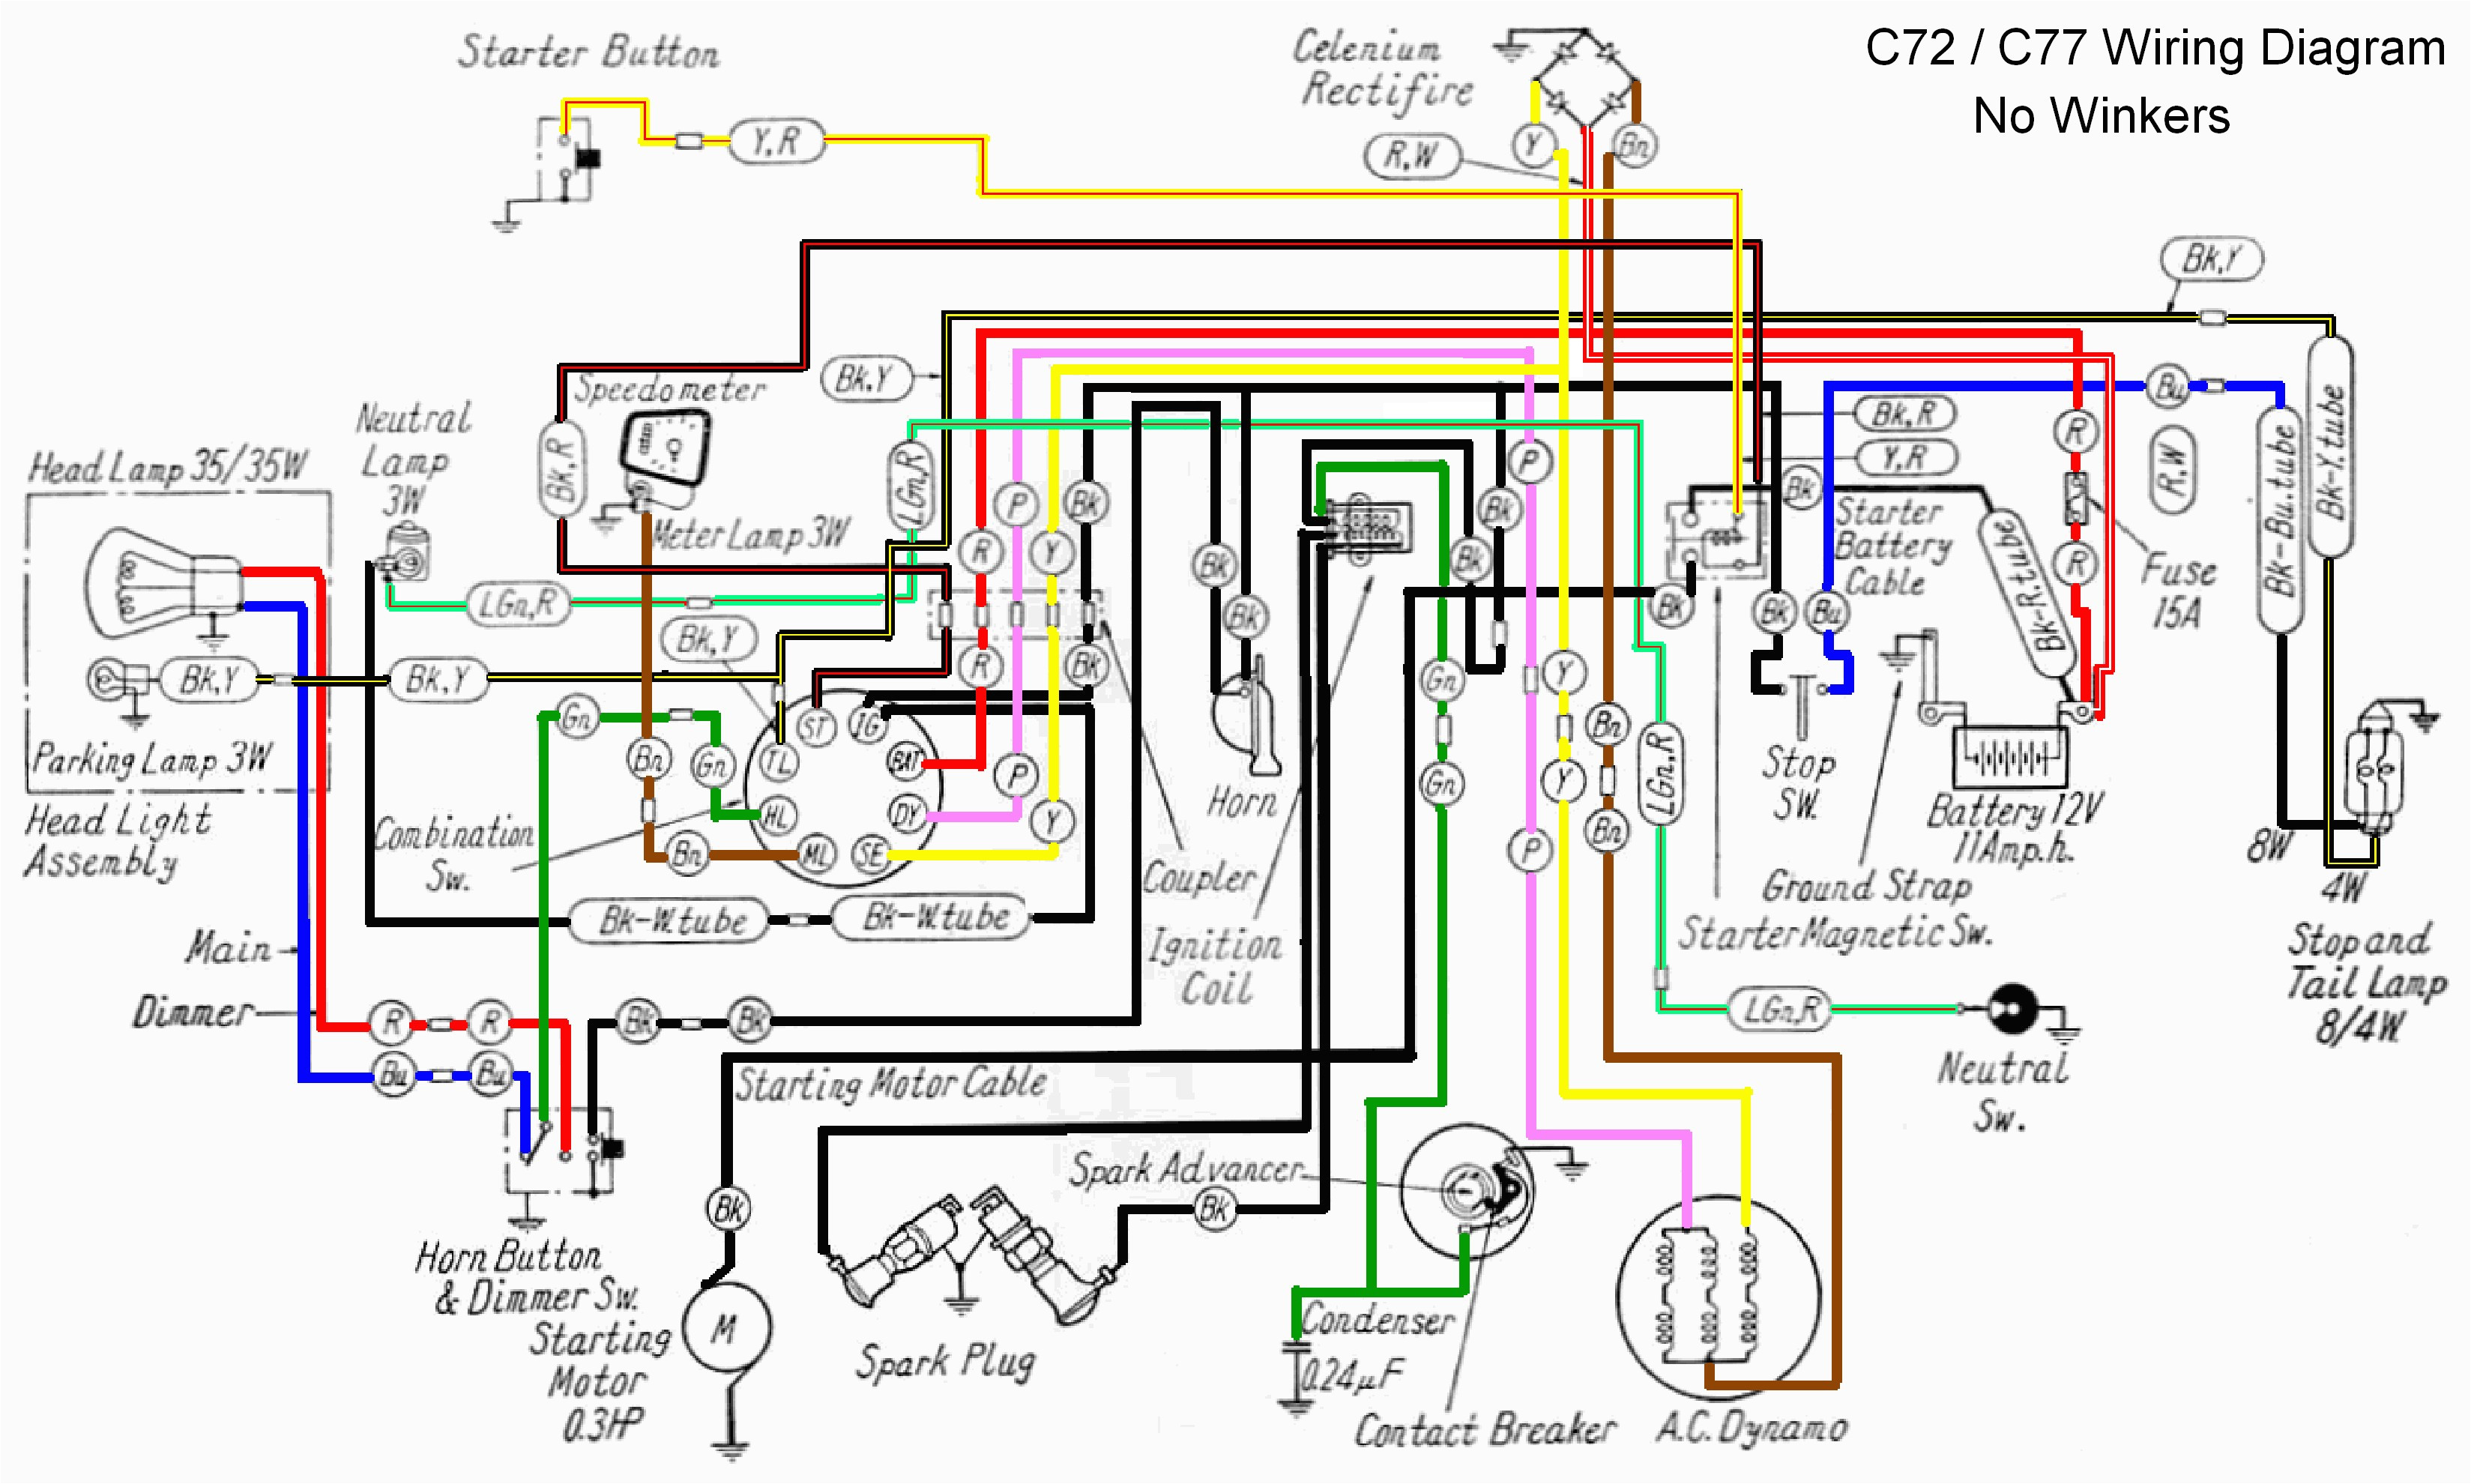 cdi wiring diagram best of honda cb750 wiring diagram fresh wiring diagram honda c70